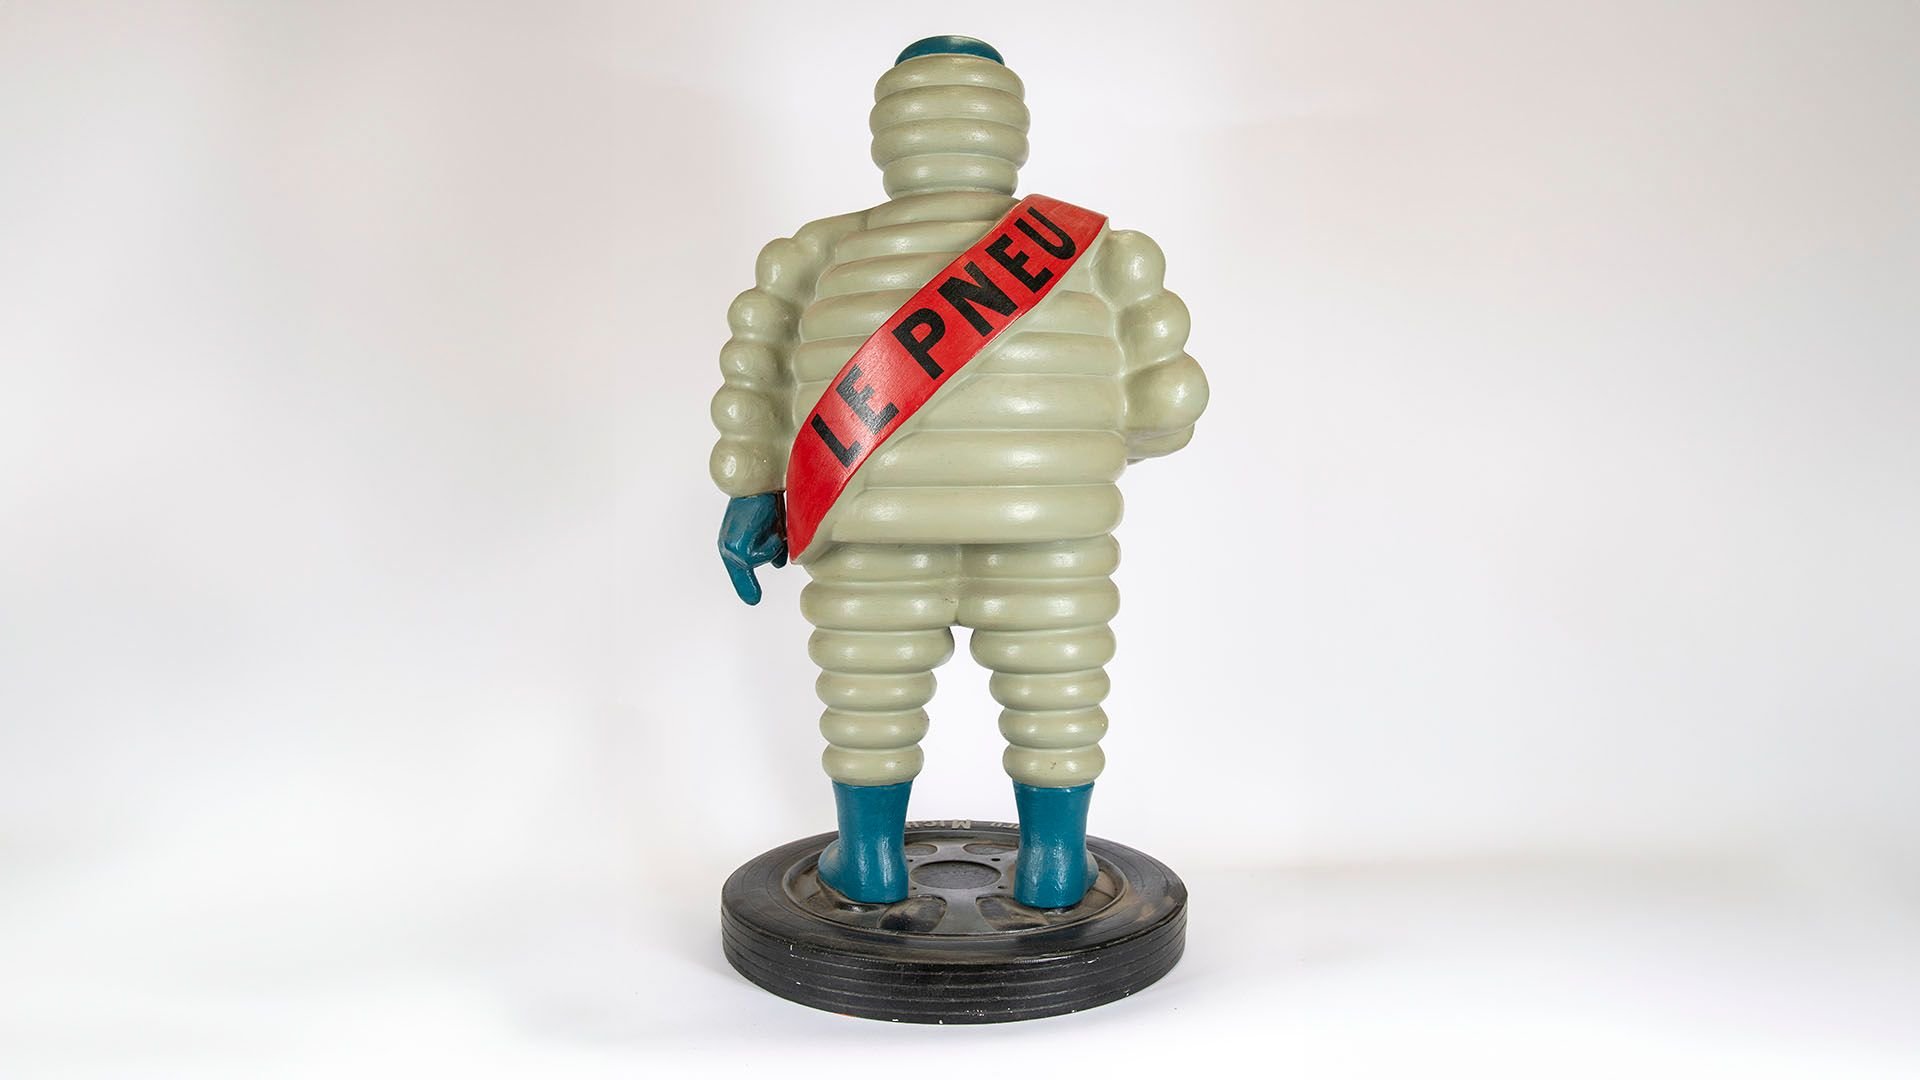 Broad Arrow Auctions | Large Michelin Man Figurine 'Le Pneu Michelin'